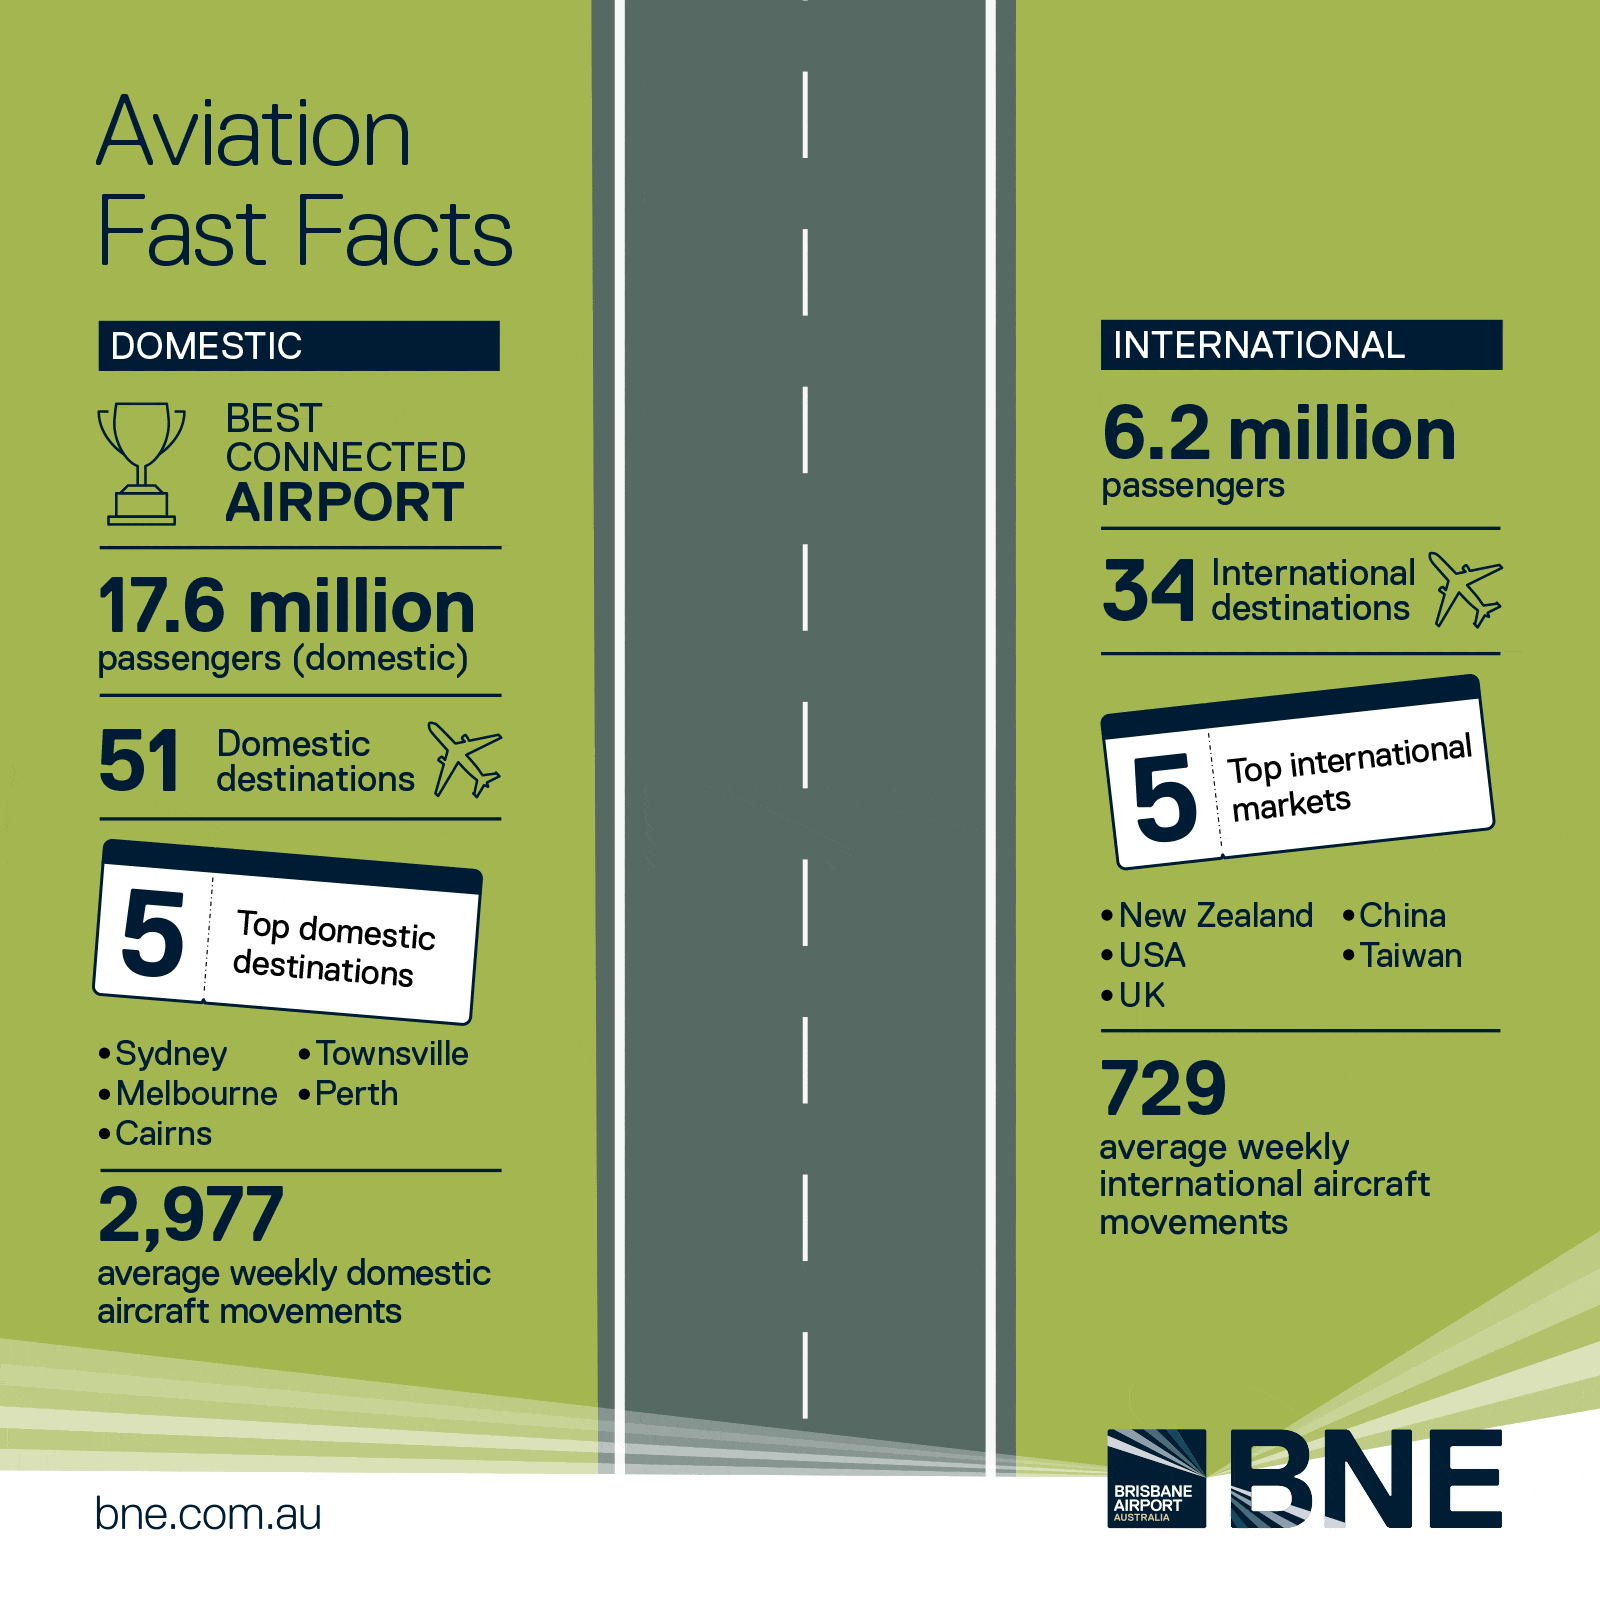 Brisbane Airport - Aviation Fast Facts